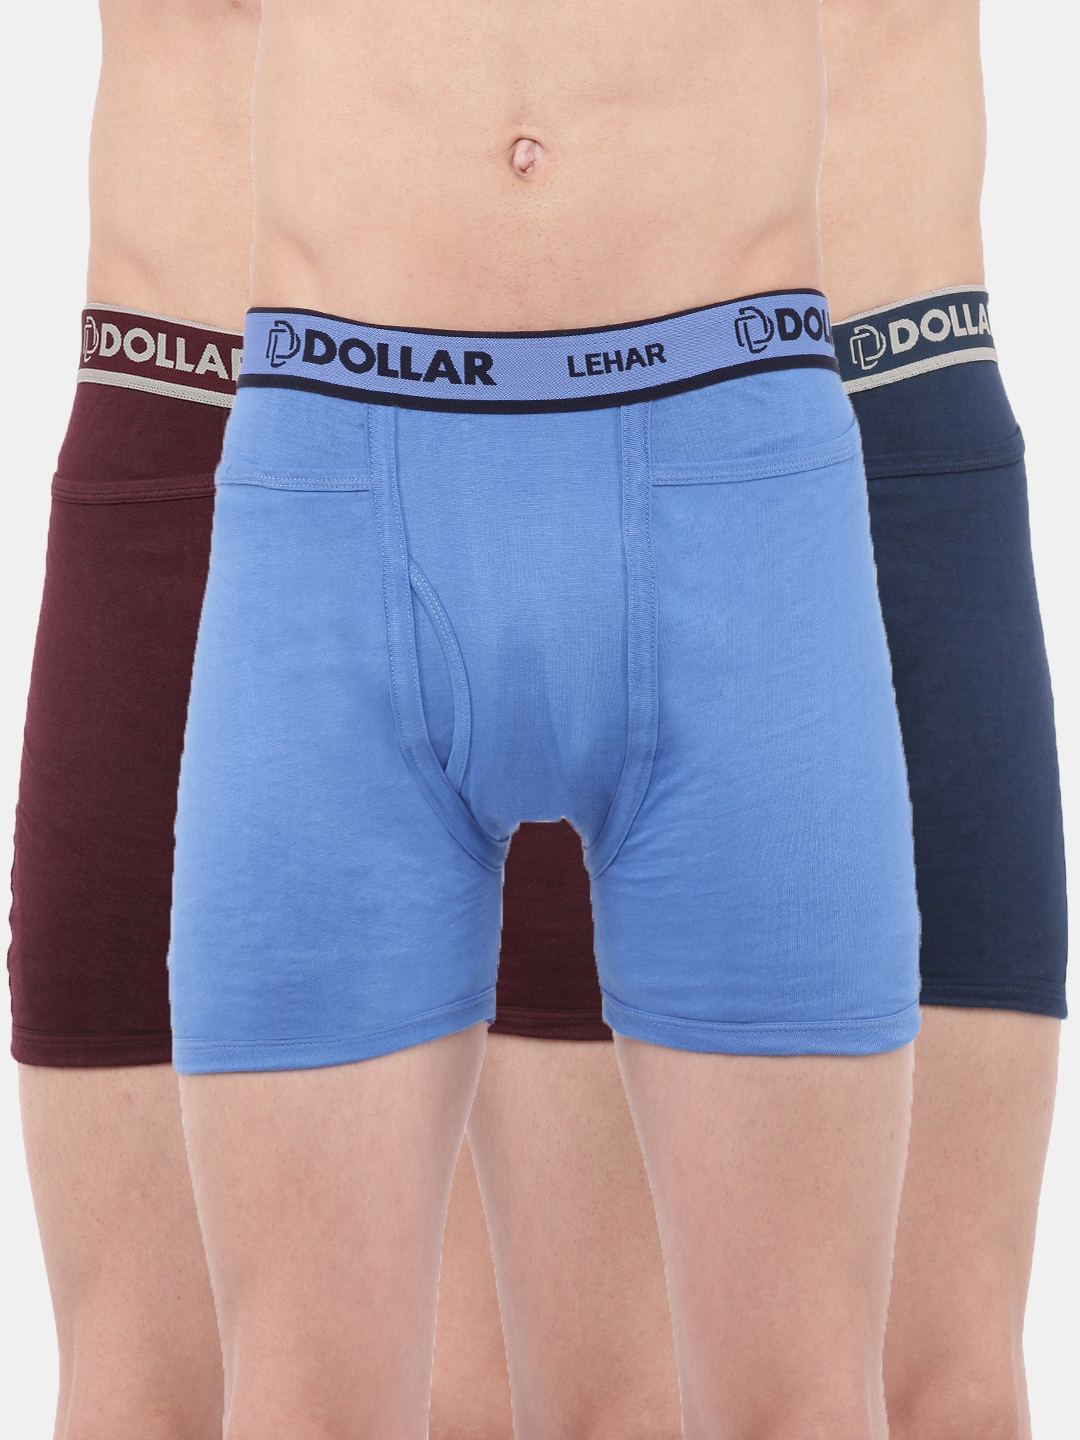 Plain Dollar Lehar Men XL Under Wear, Type: Trunks at Rs 140/piece